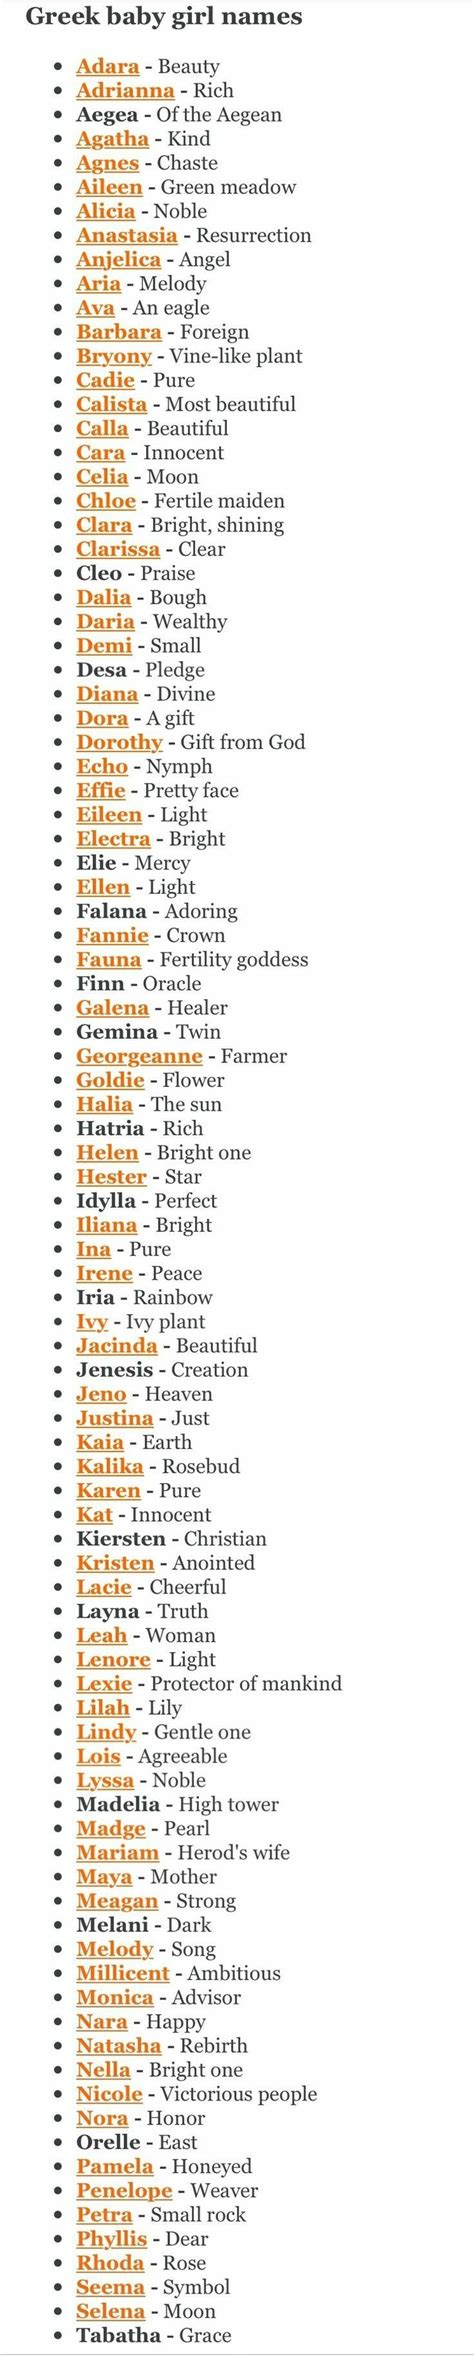 Feminine Greek Names | Greek baby girl names, Baby girl names, Baby ...